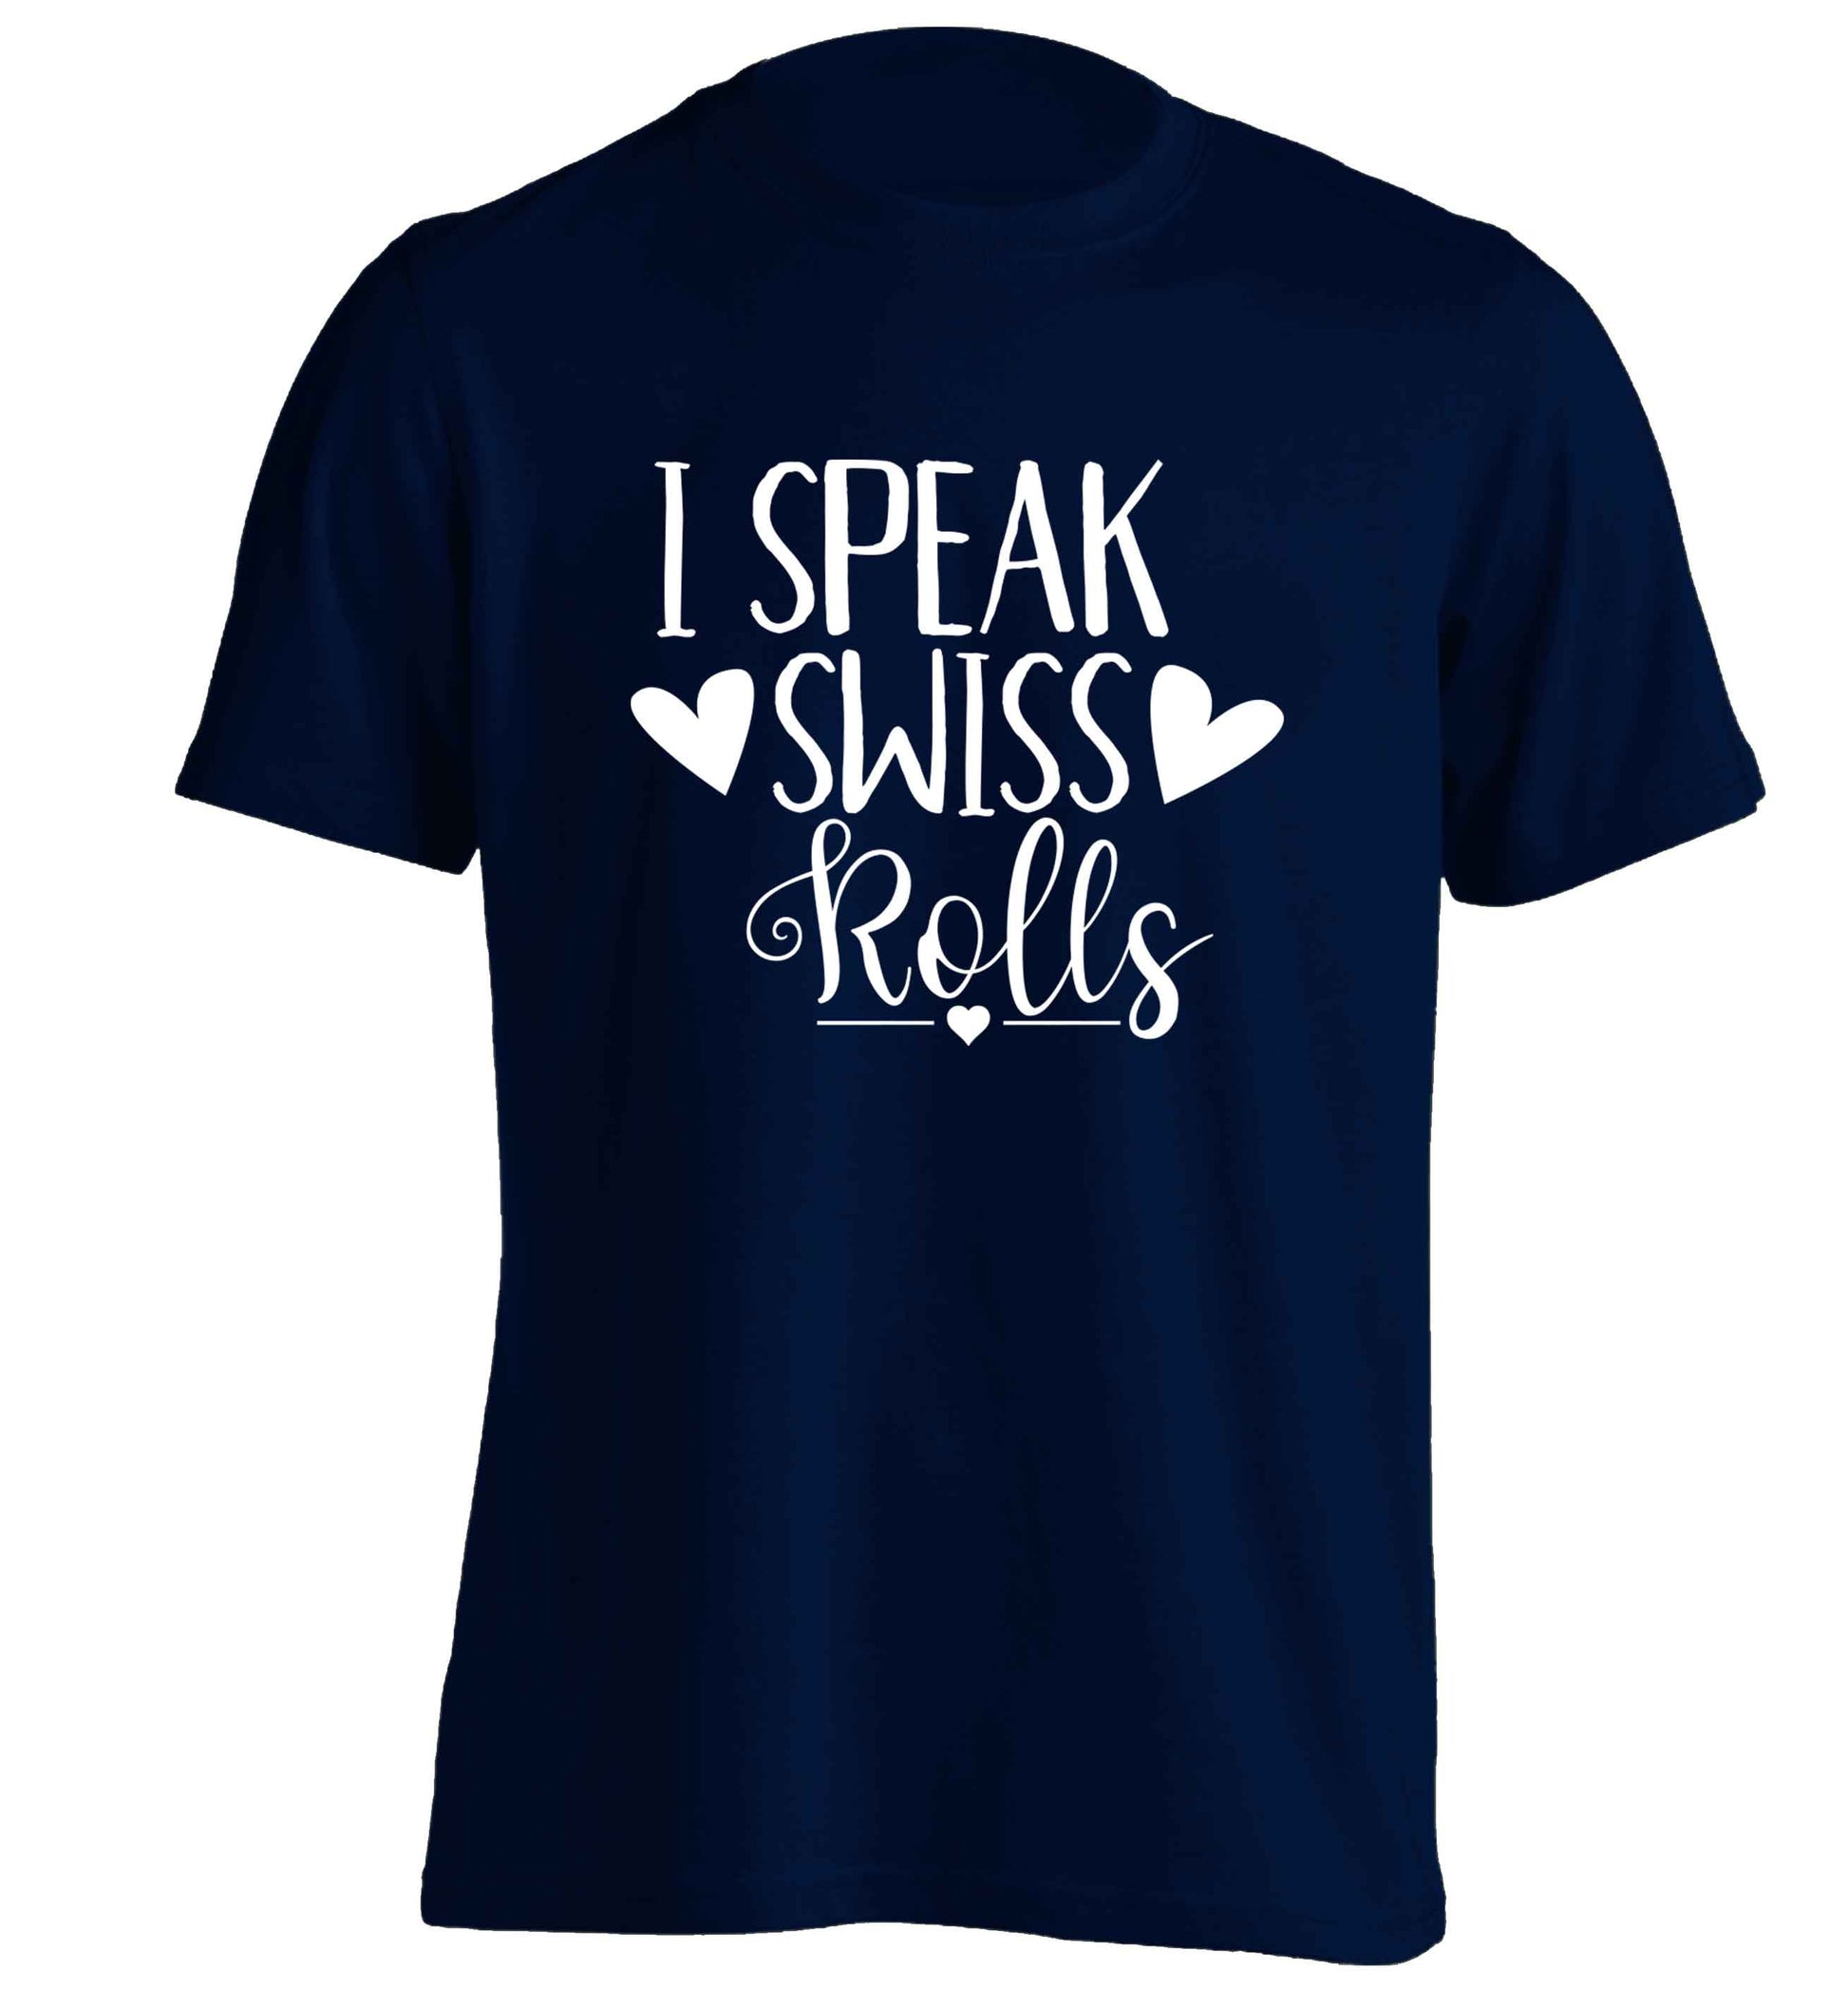 I speak swiss..rolls adults unisex navy Tshirt 2XL